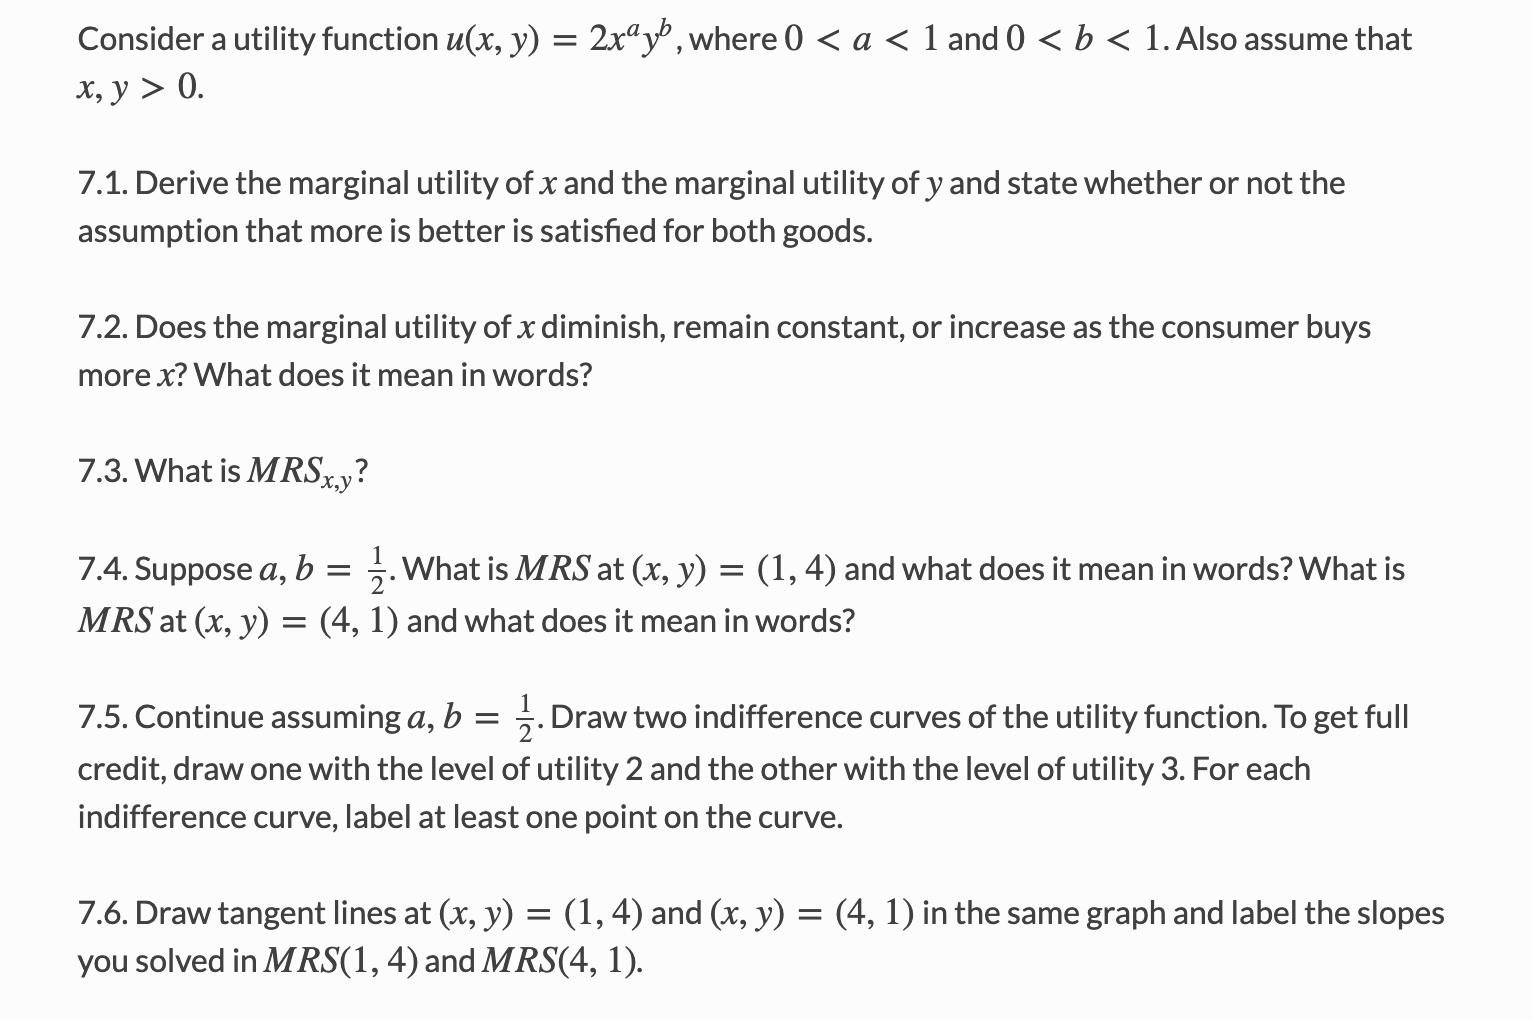 Consider a utility function u(x, y)
2xºyb, where 0 < a < 1 and 0 < b < 1. Also assume that
X, y > 0.
7.1. Derive the marginal